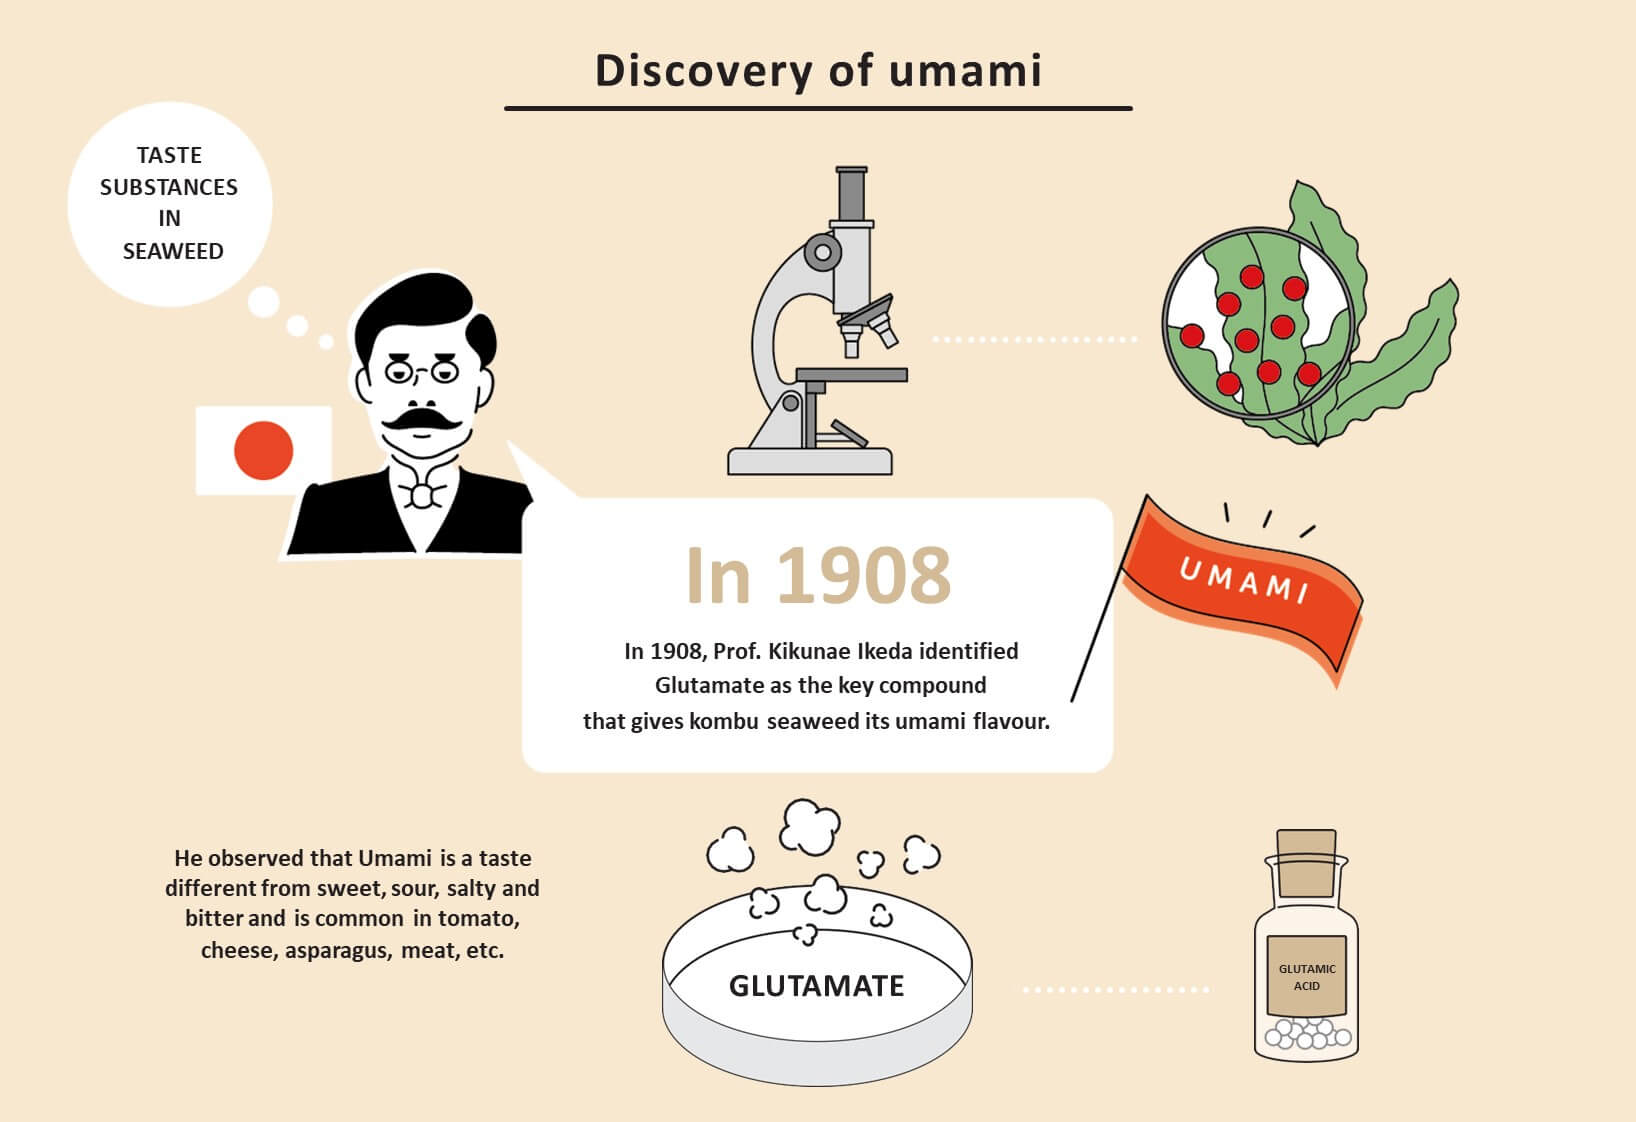 In 1908, Prof. Kikunae Ikeda identified glutamate as the key compound that gives kombu seaweed its umami flavor.